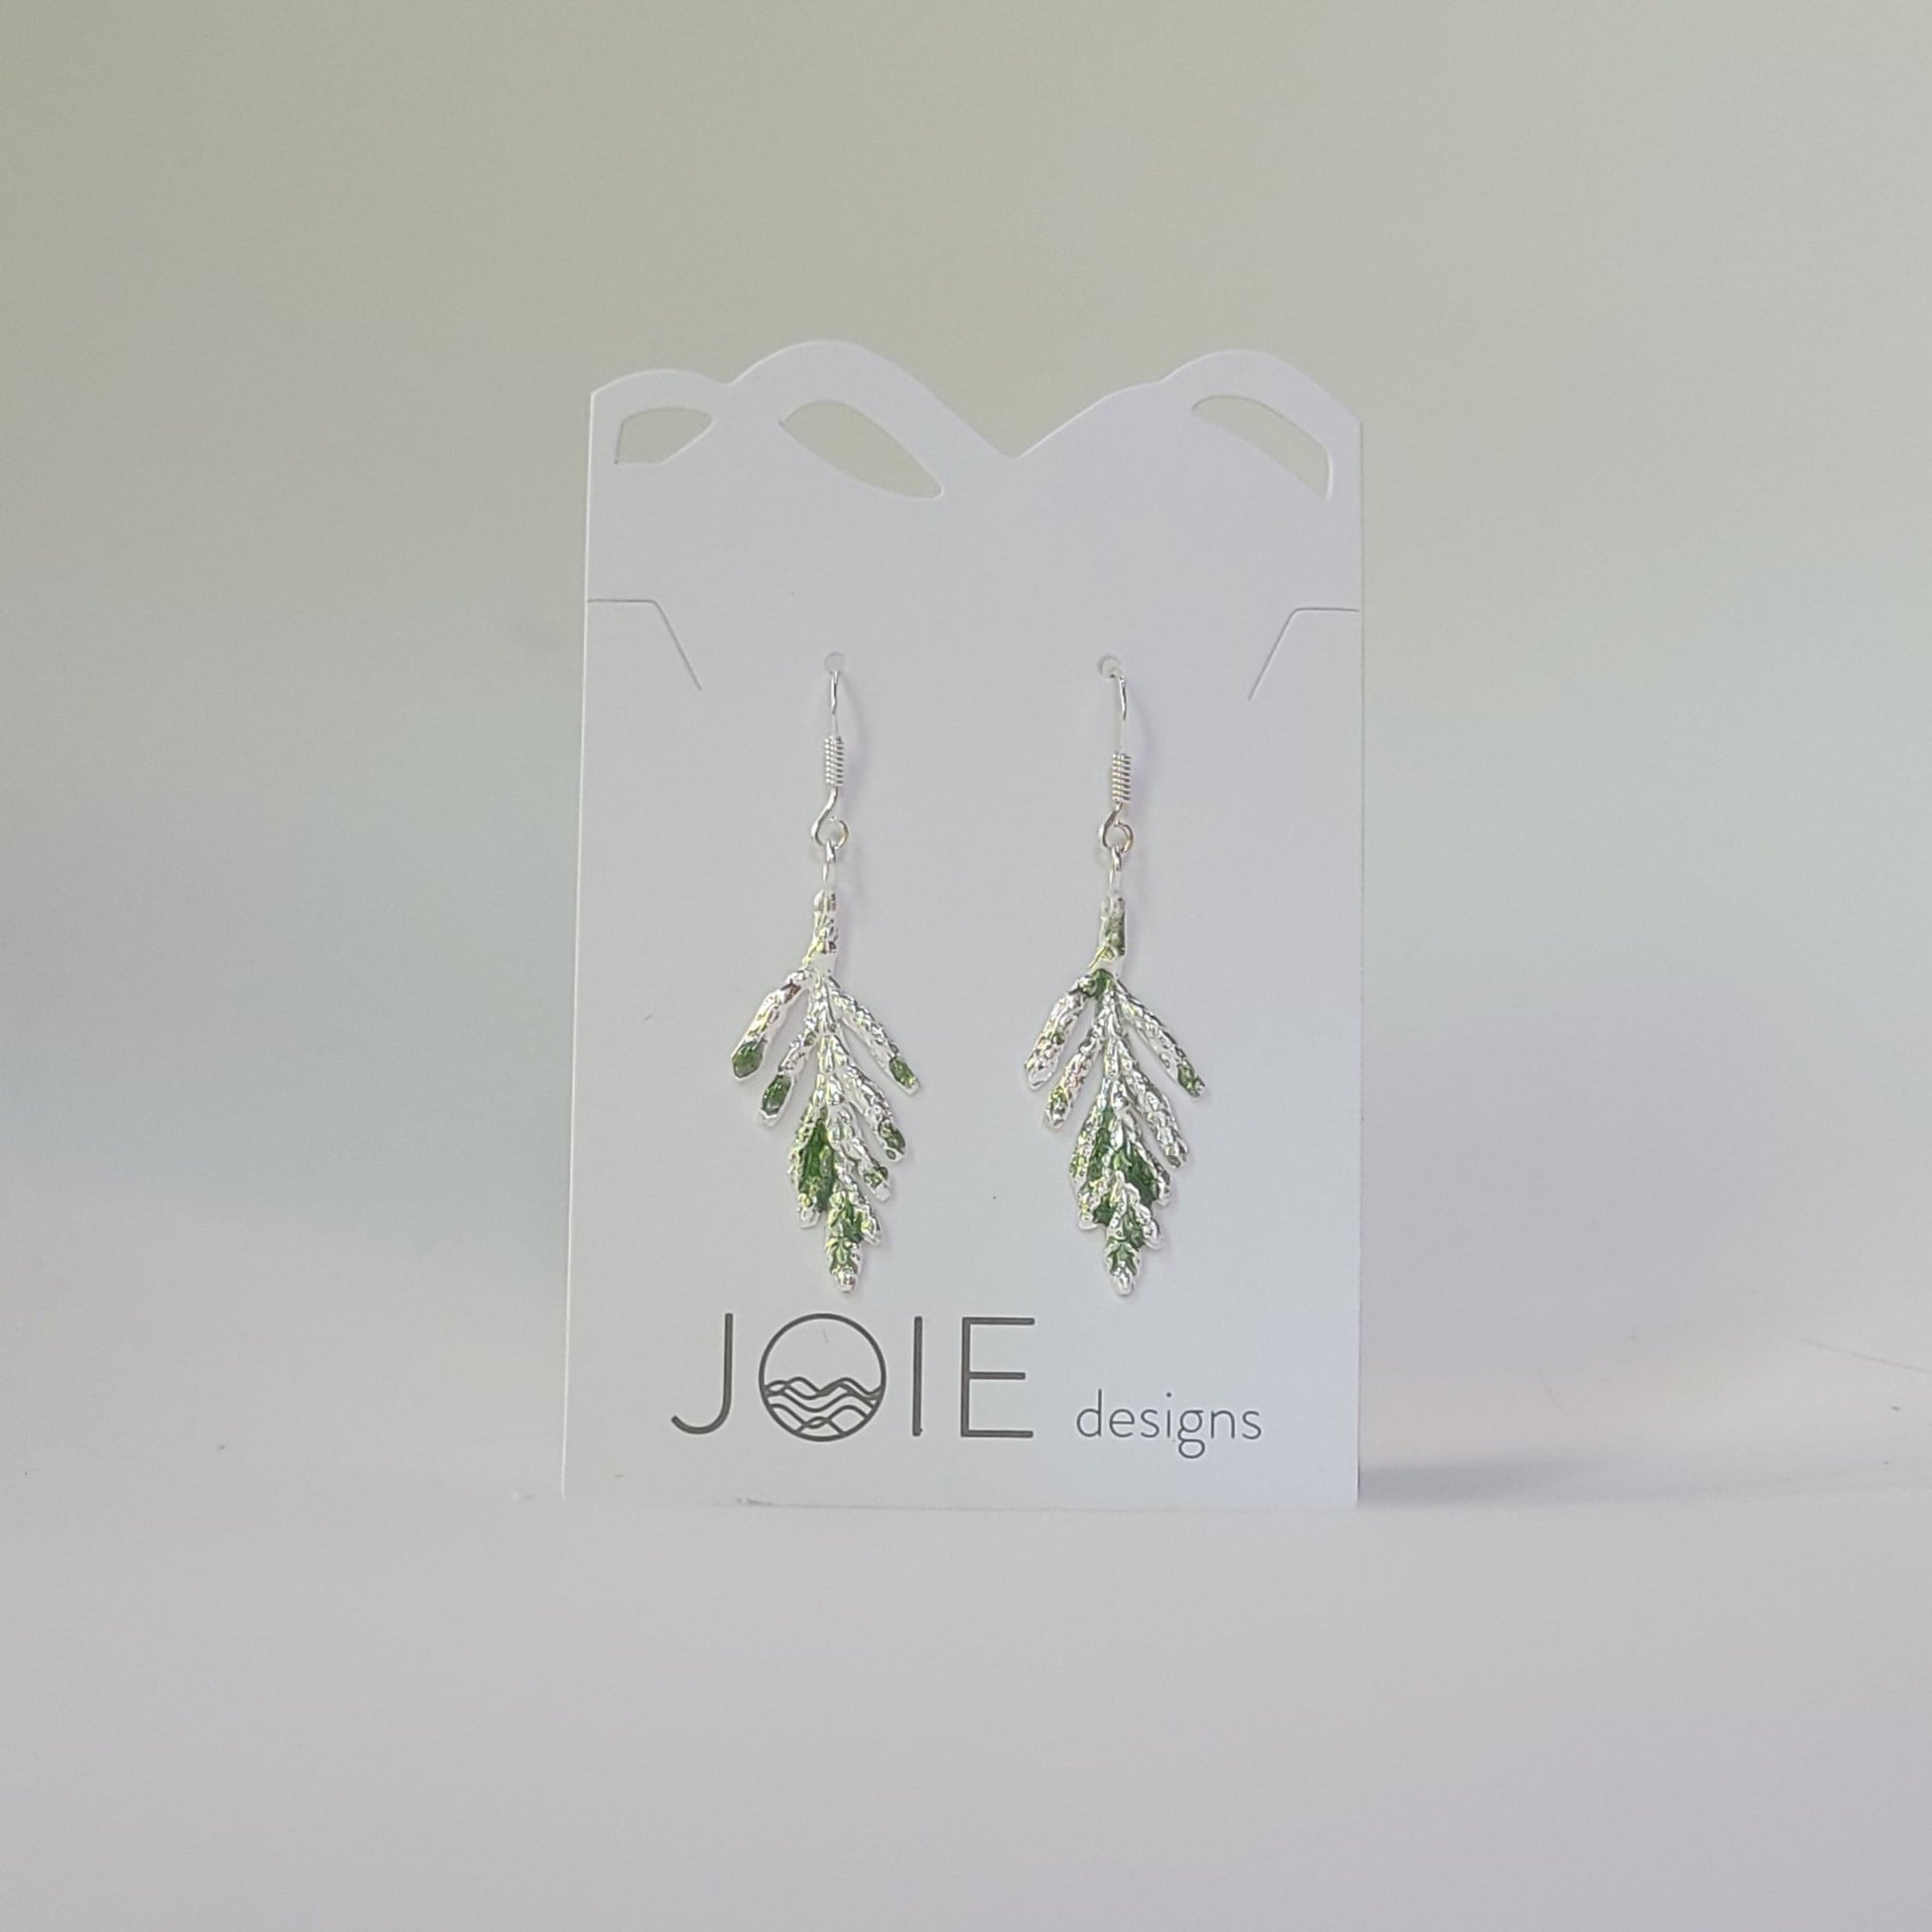 silver cedar leaf dangle earrings embellished with green resin